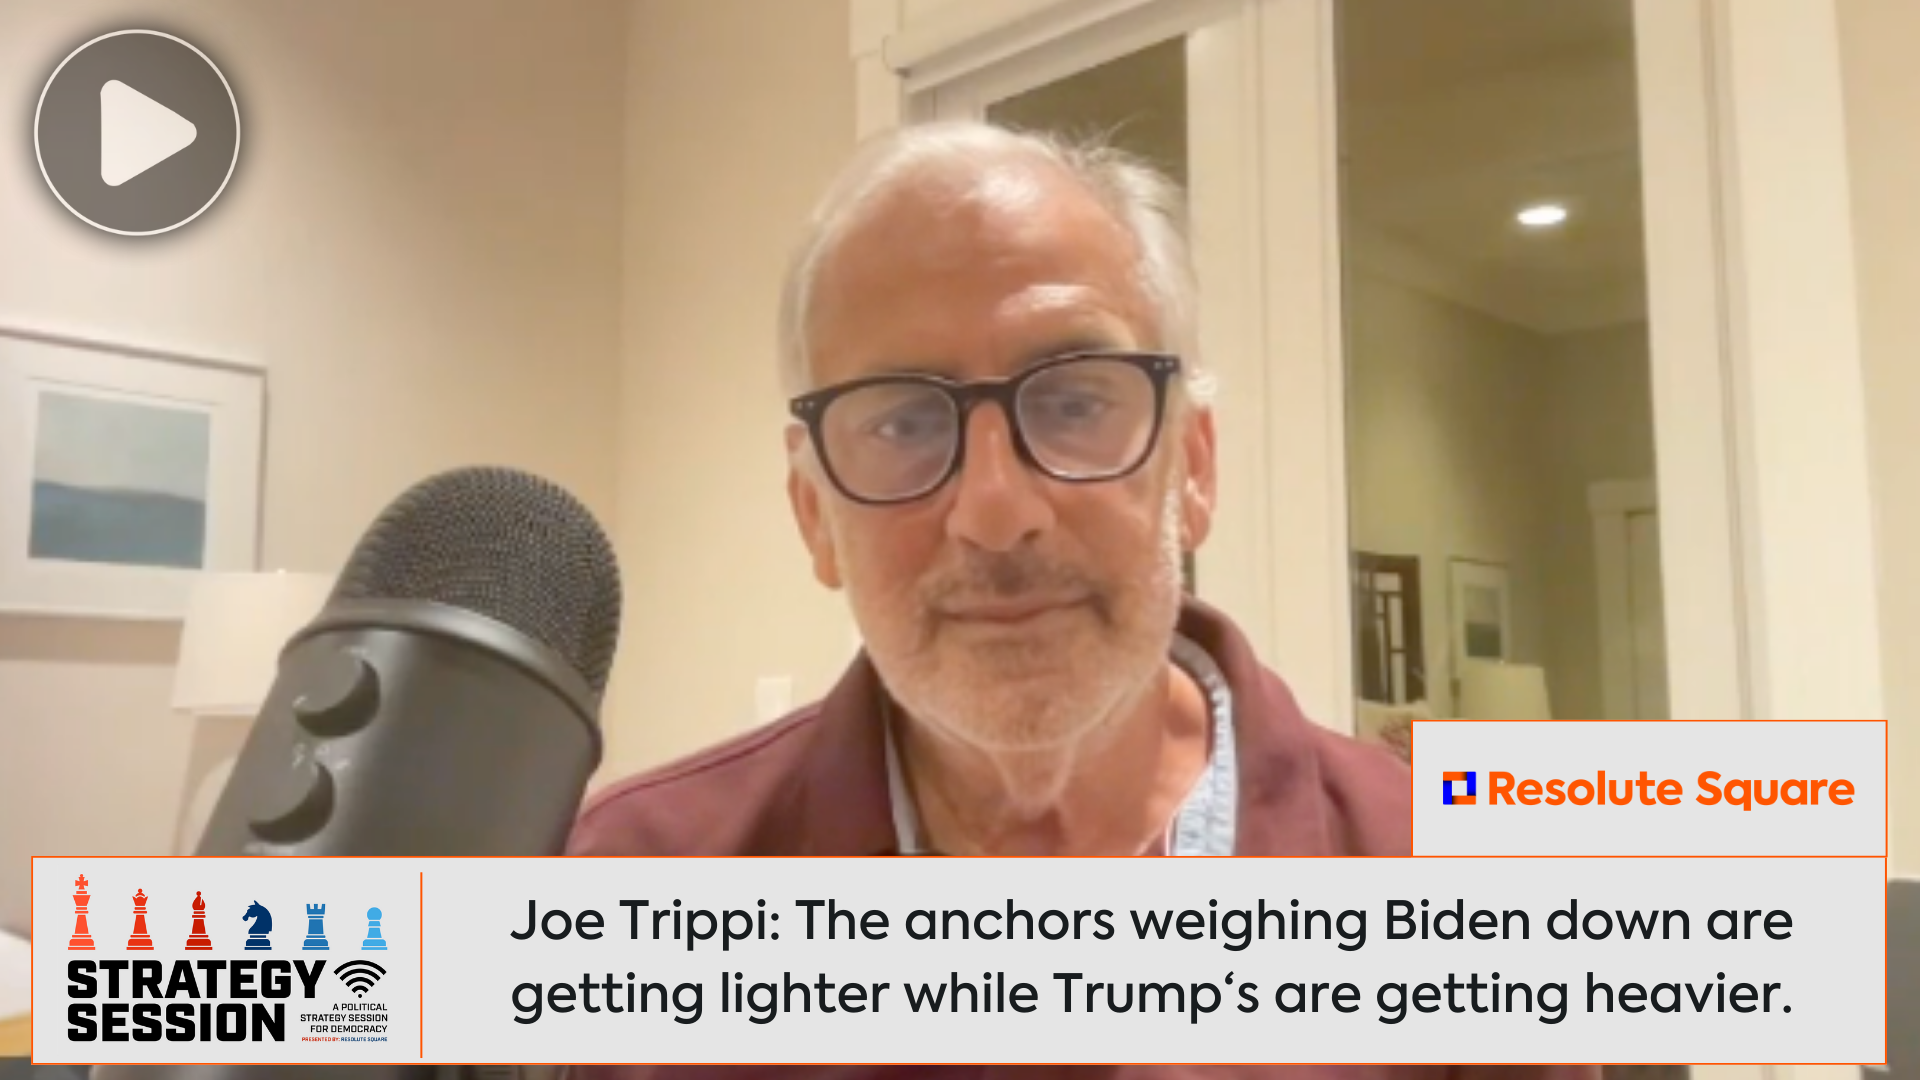 What Joe Trippi Is Tracking